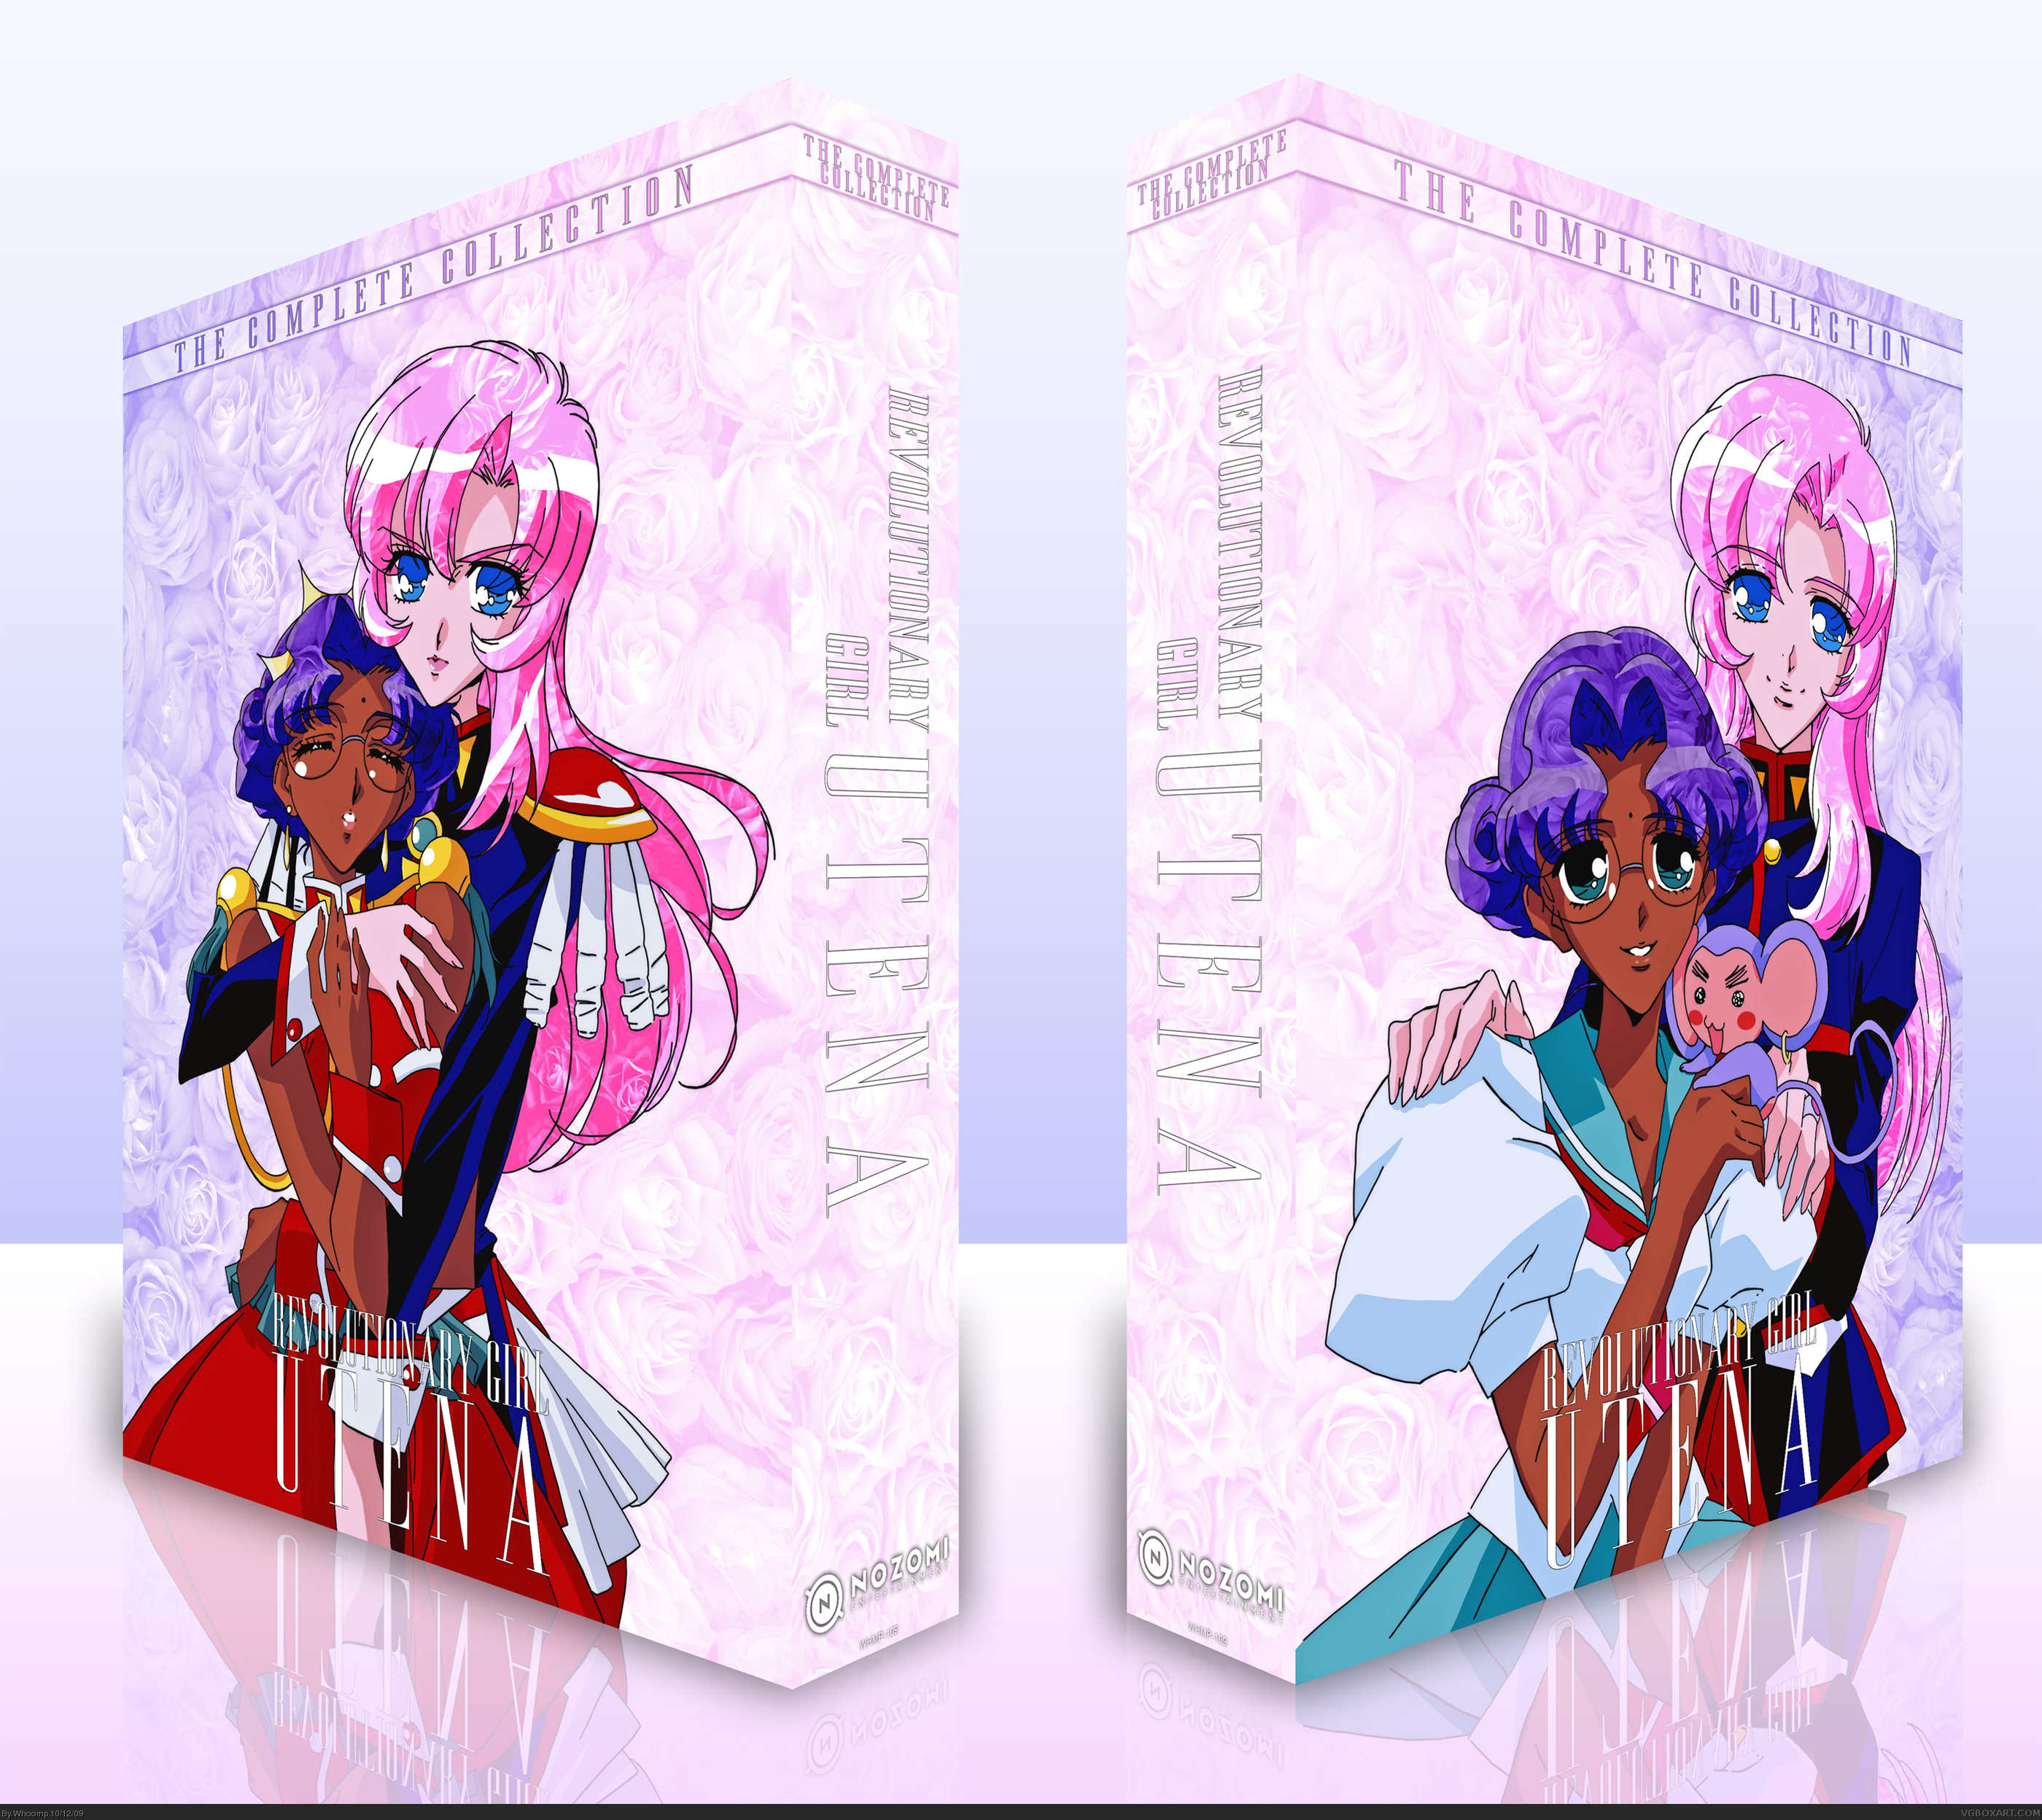 Revolutionary Girl Utena The Complete Collection box cover